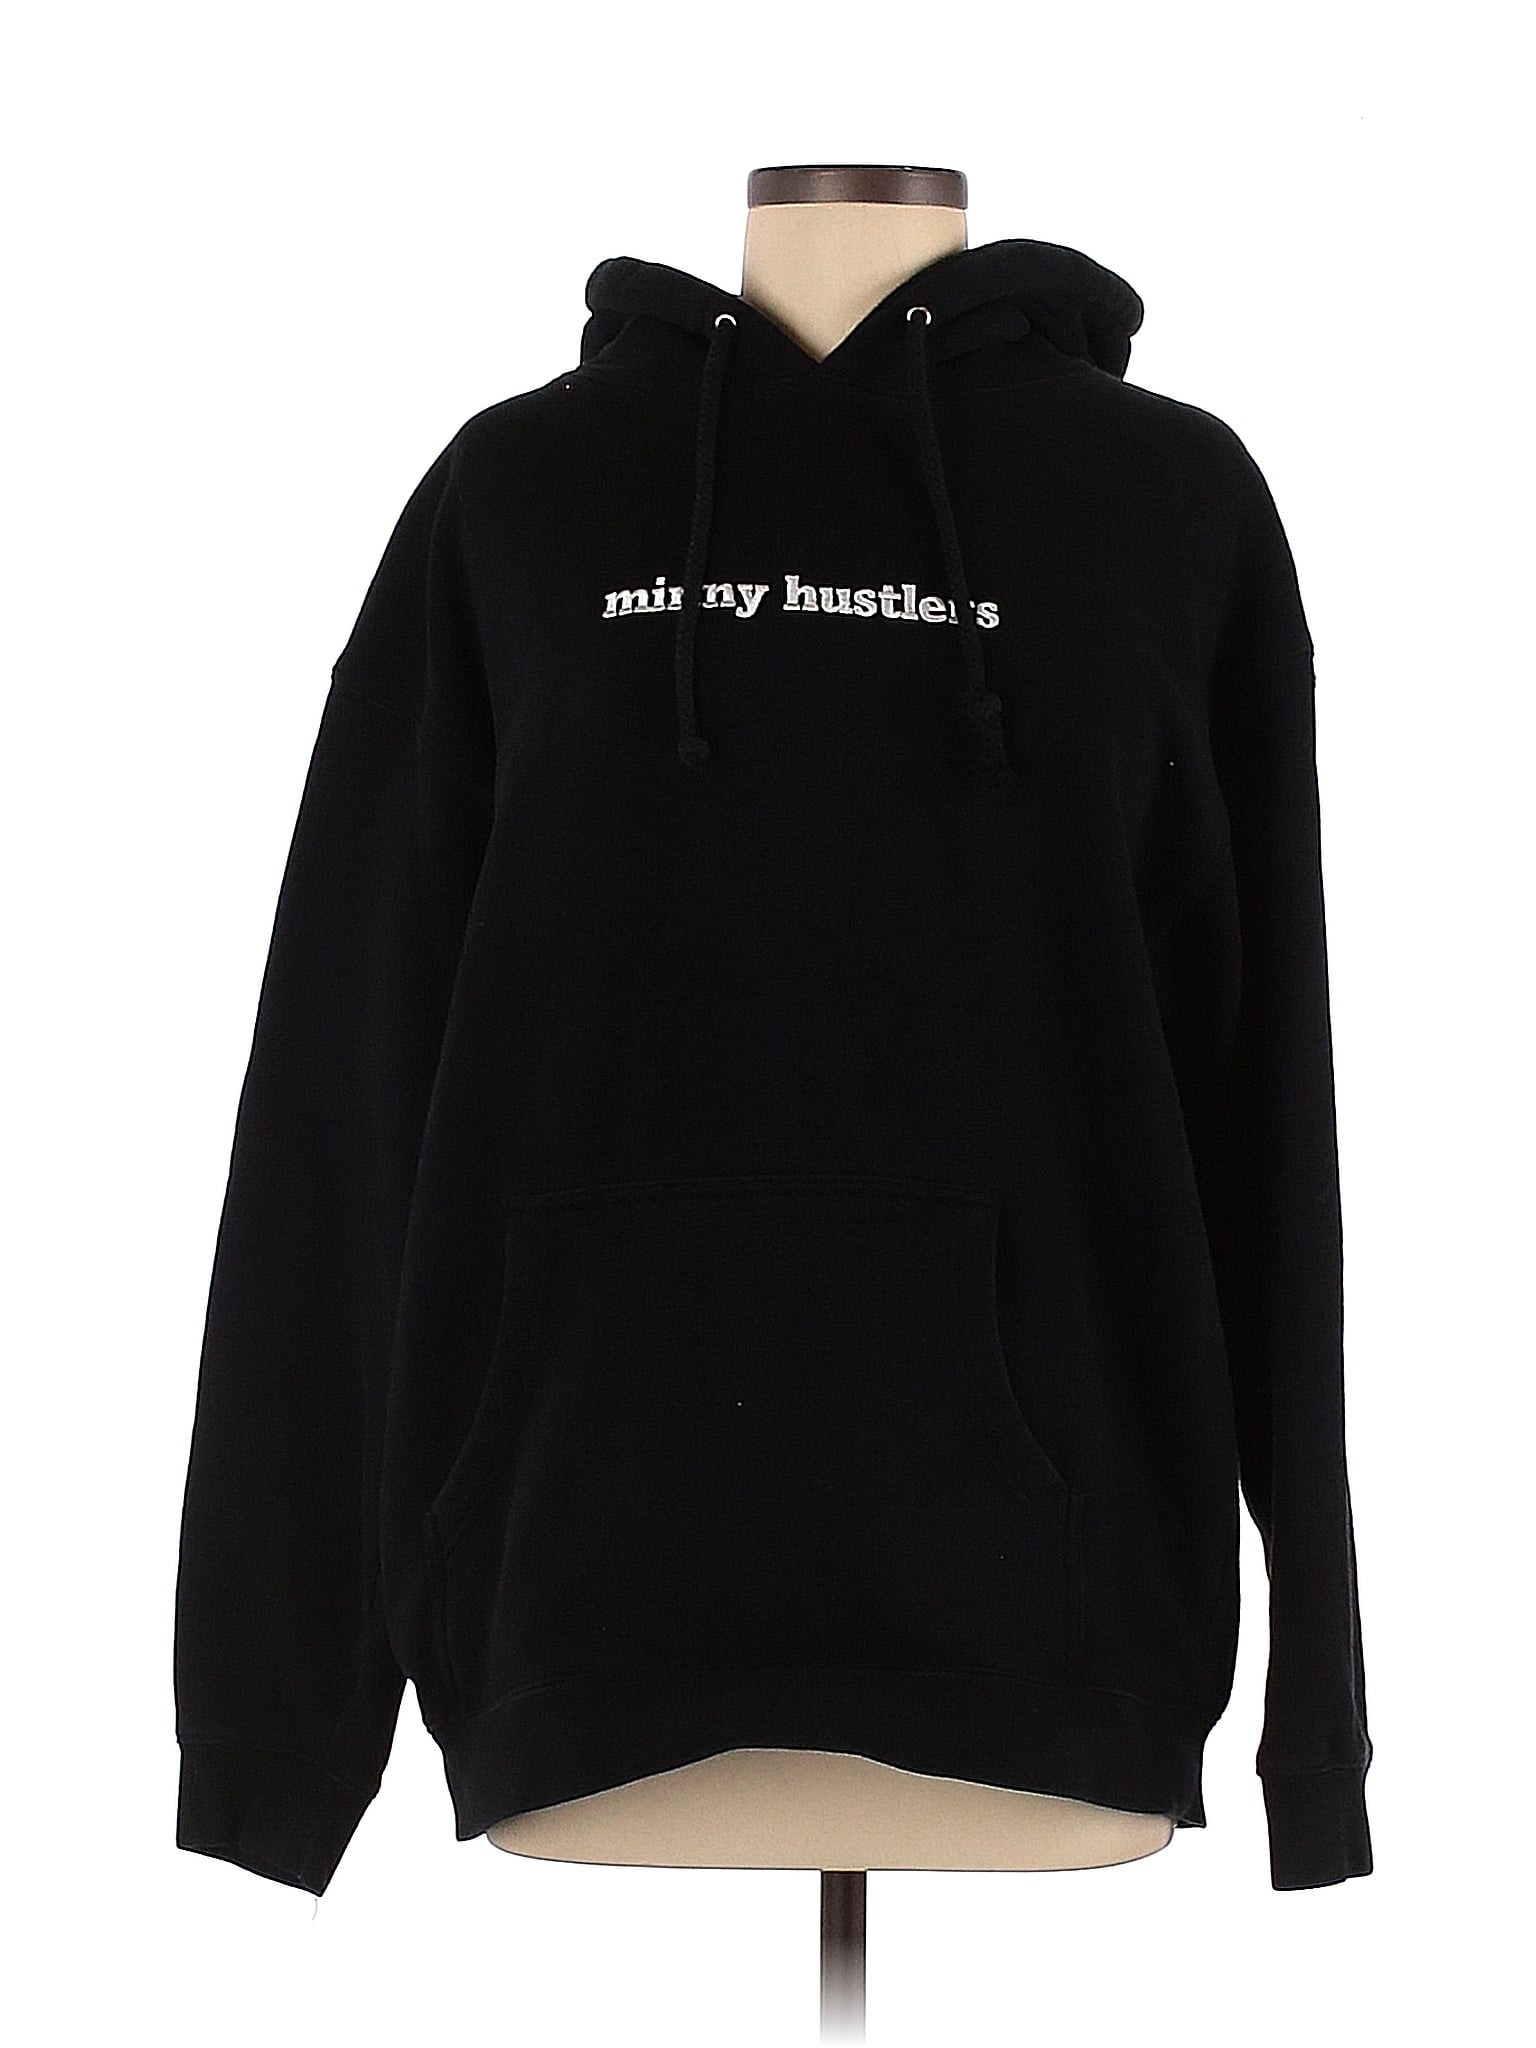 Assorted Brands Black Pullover Hoodie Size L - 52% off | thredUP